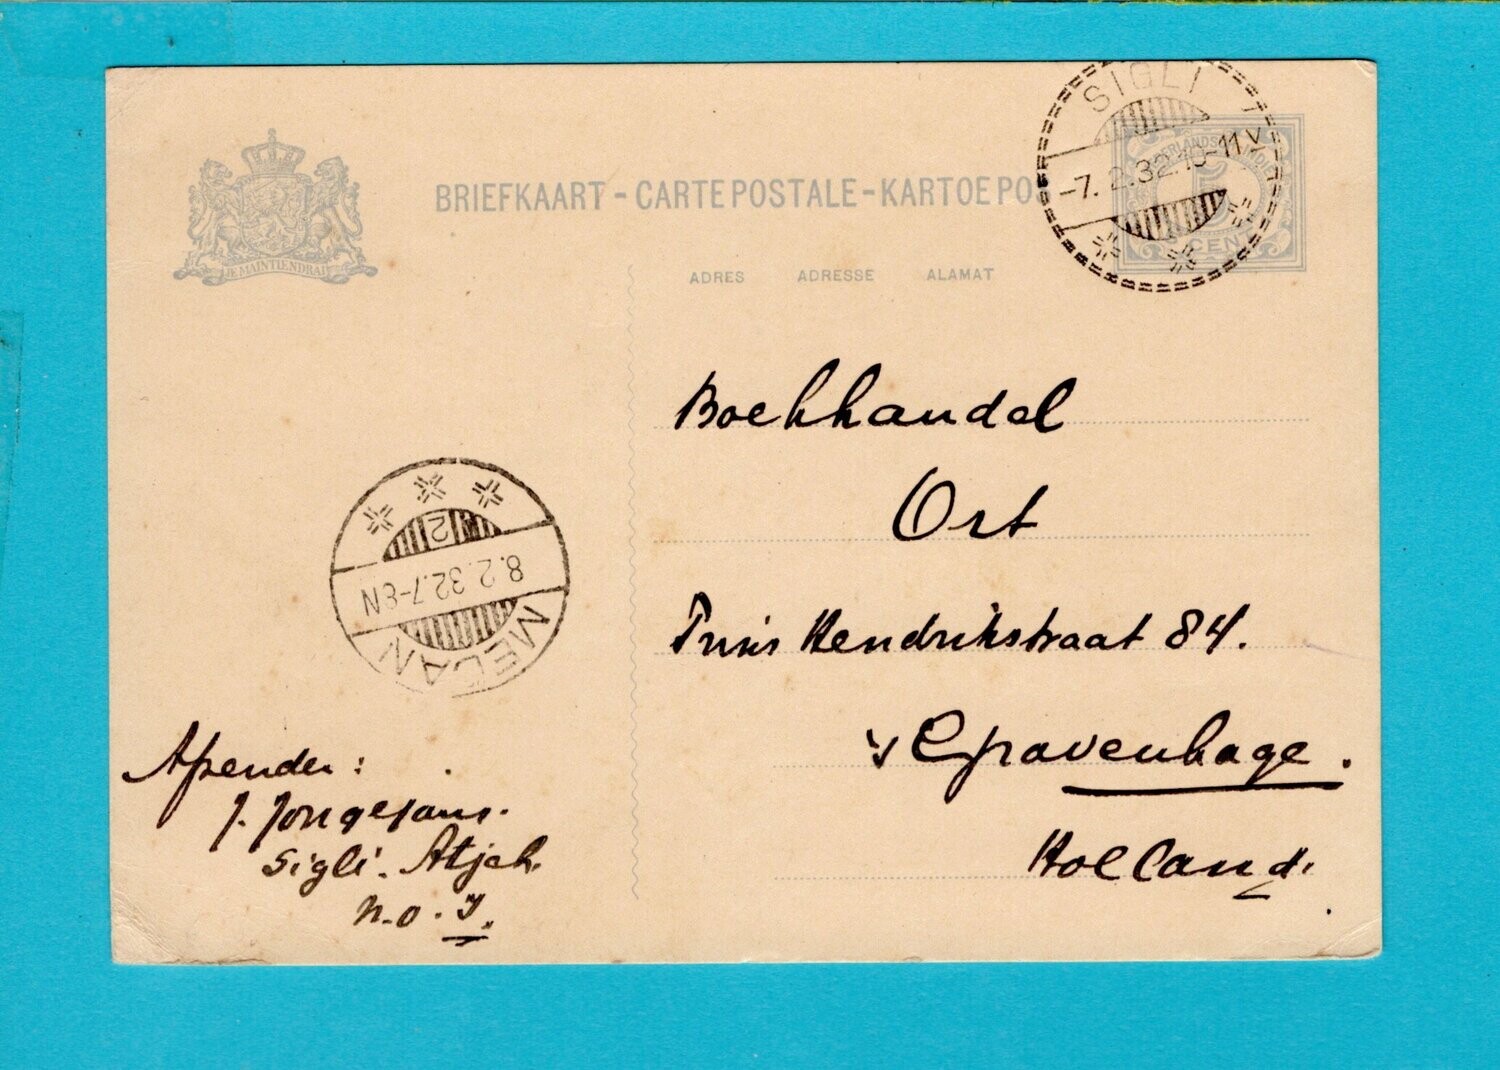 NETHERLANDS EAST INDIES postal card 1932 Sigli to Medan